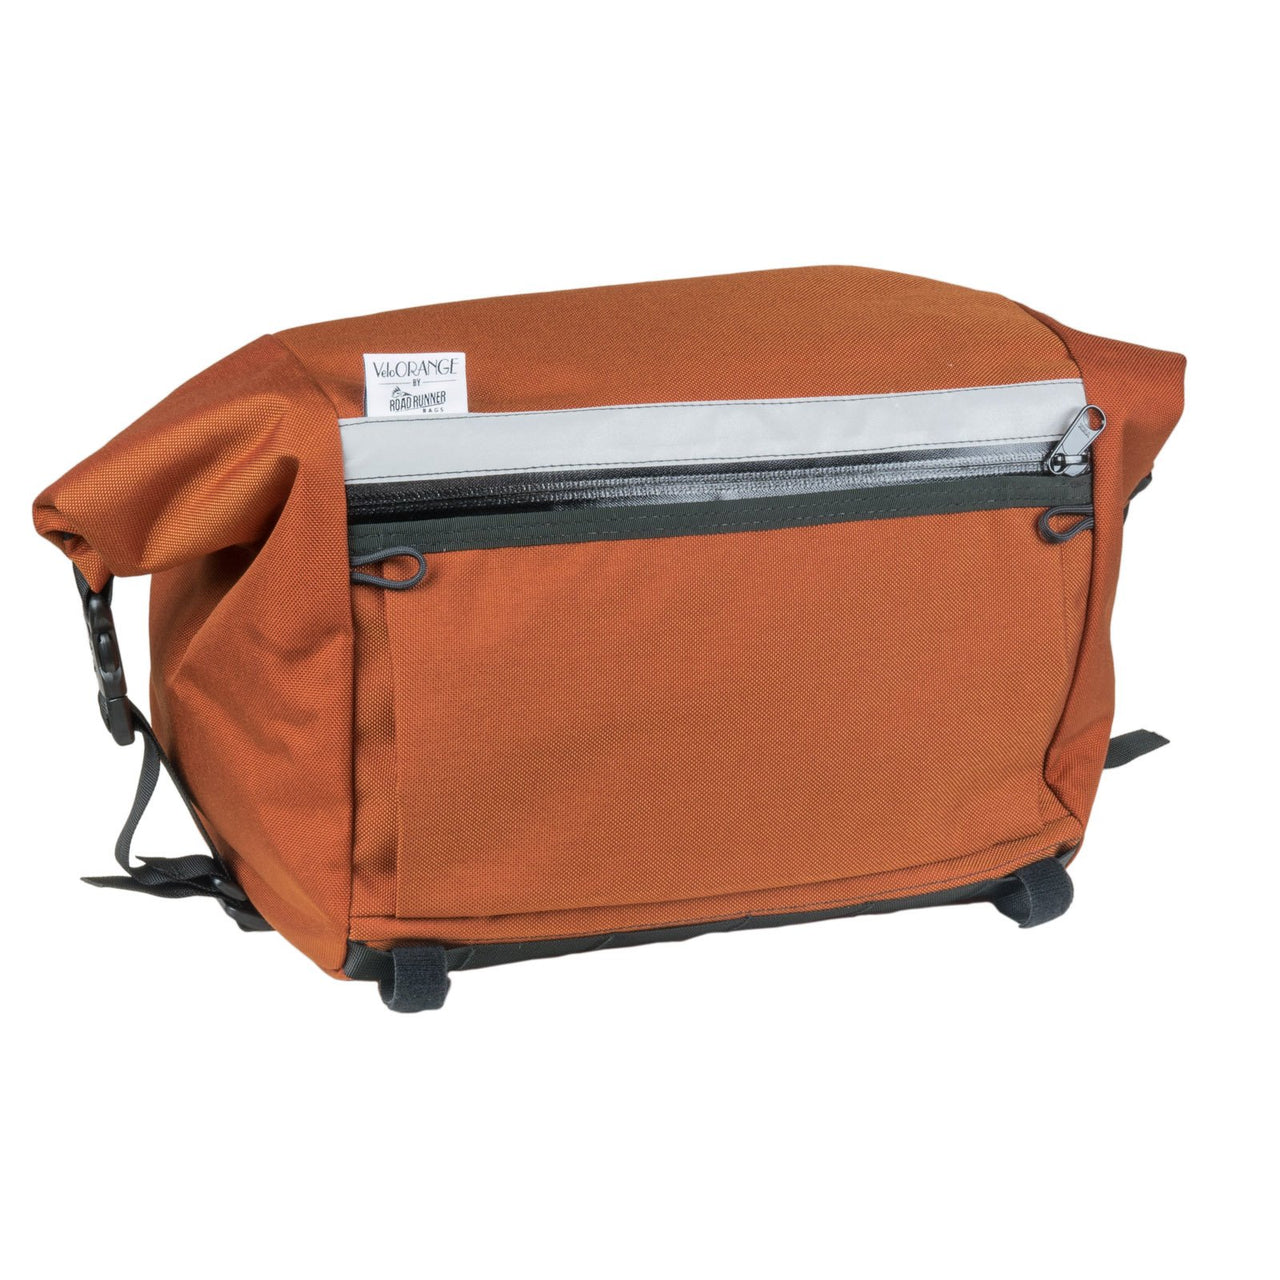 Velo Orange Transporteur Bag